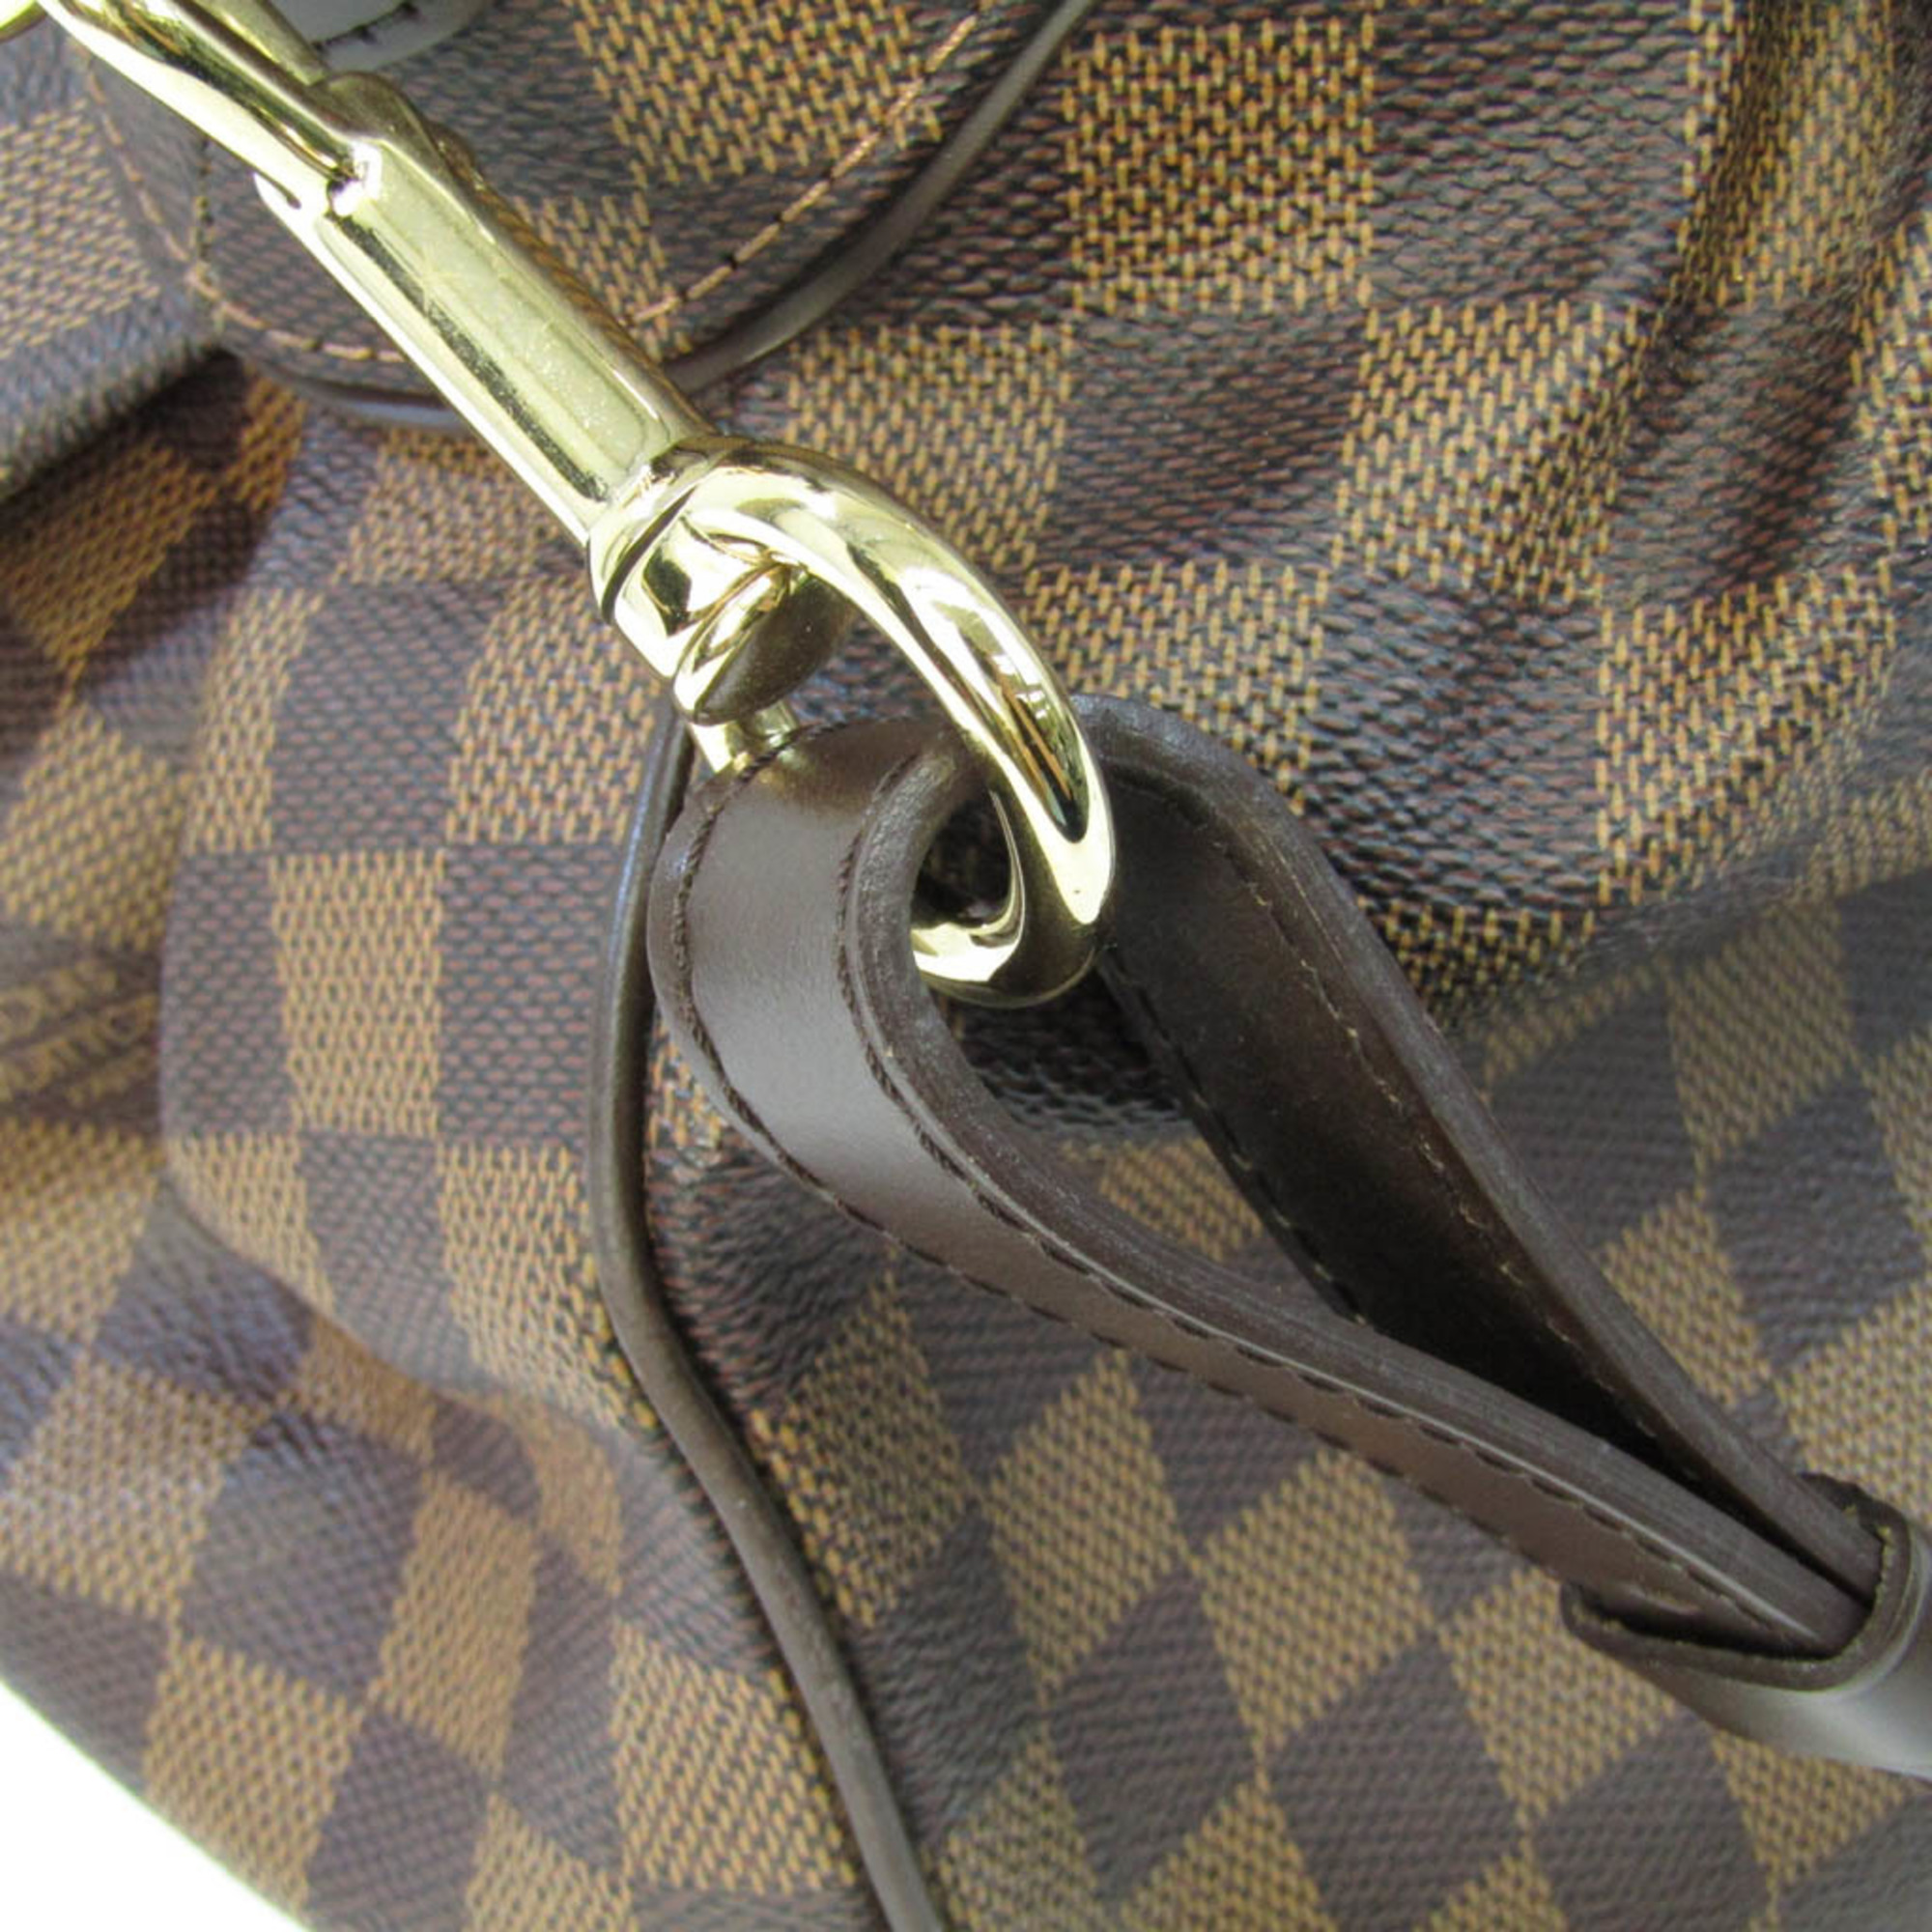 Louis Vuitton Damier Trevi GM N51998 Women's Handbag,Shoulder Bag Ebene